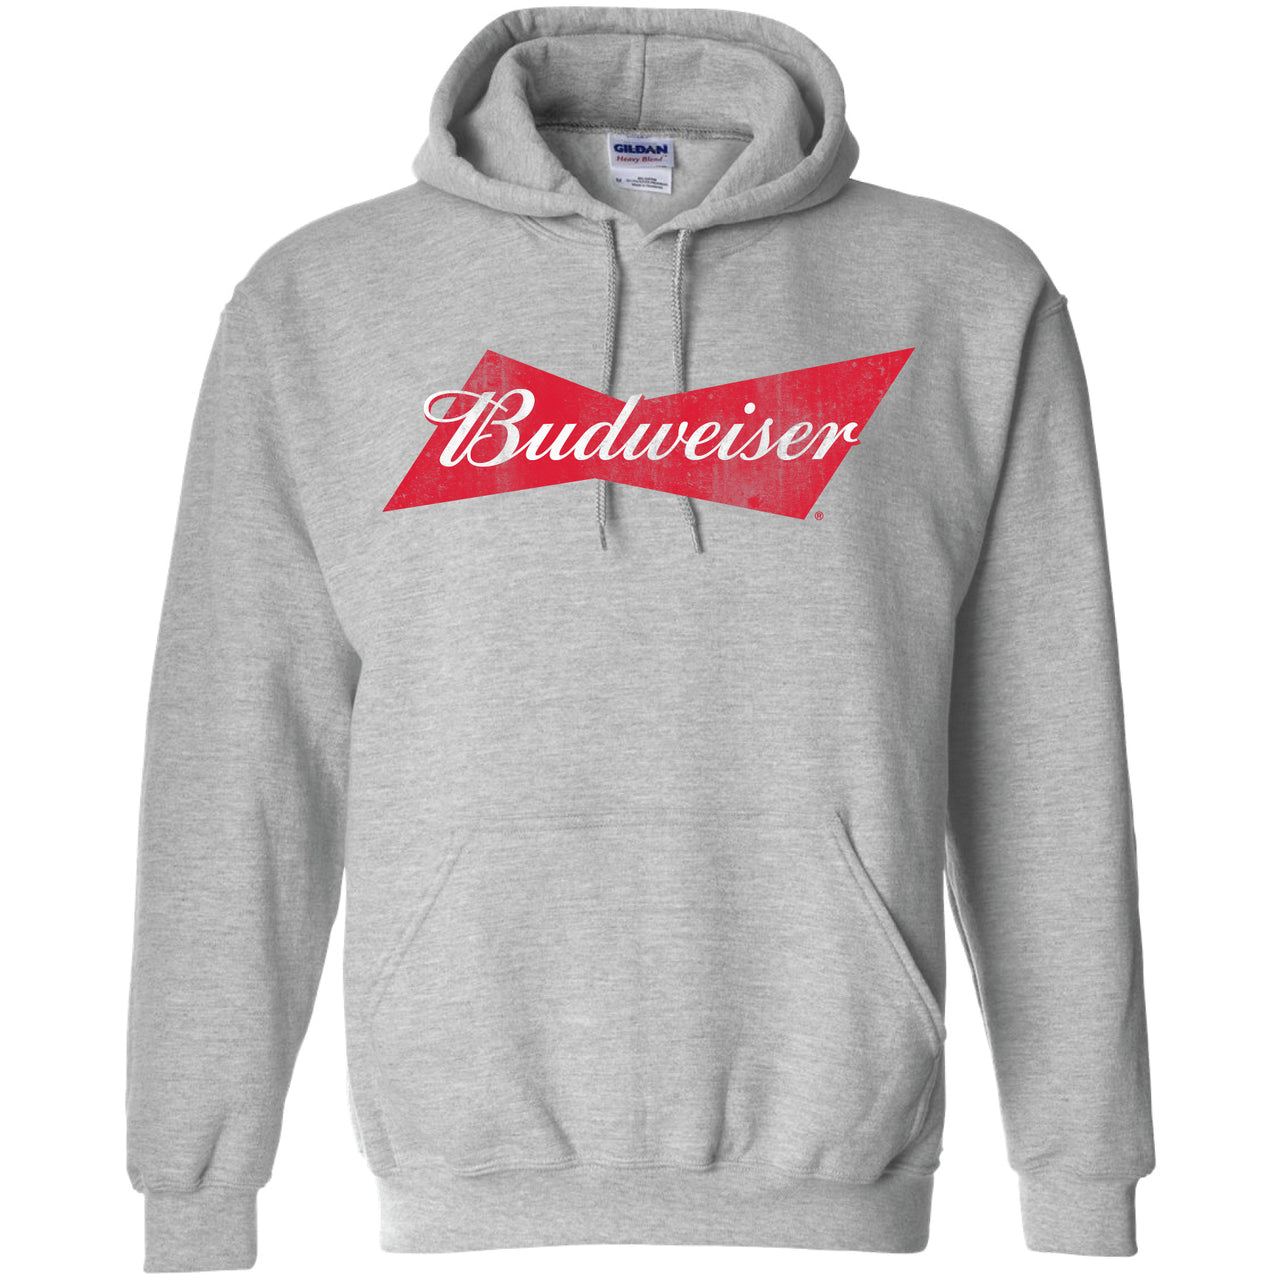 Budweiser - Bow Tie Logo Hooded Sweatshirt